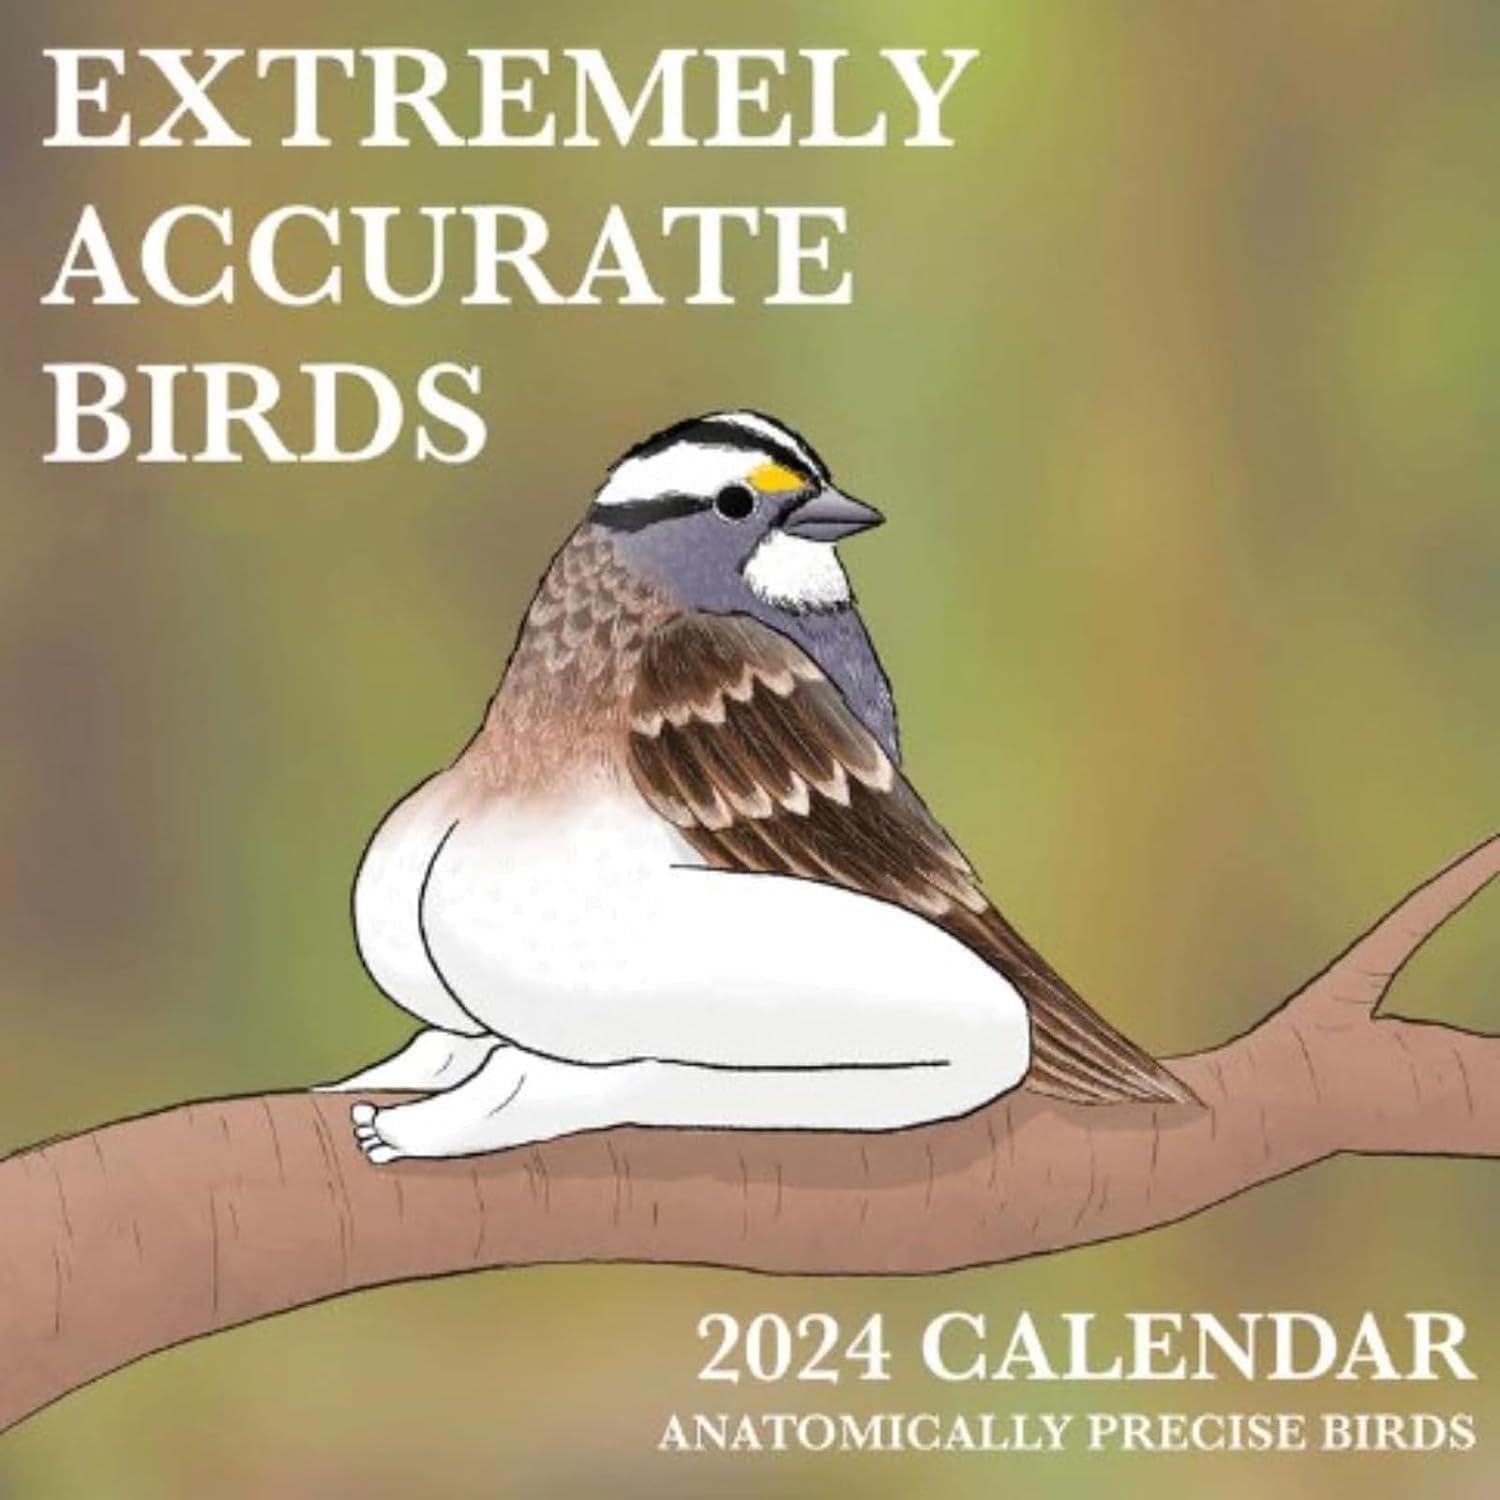 Calendario da parete 2024 di uccelli estremamente accurati